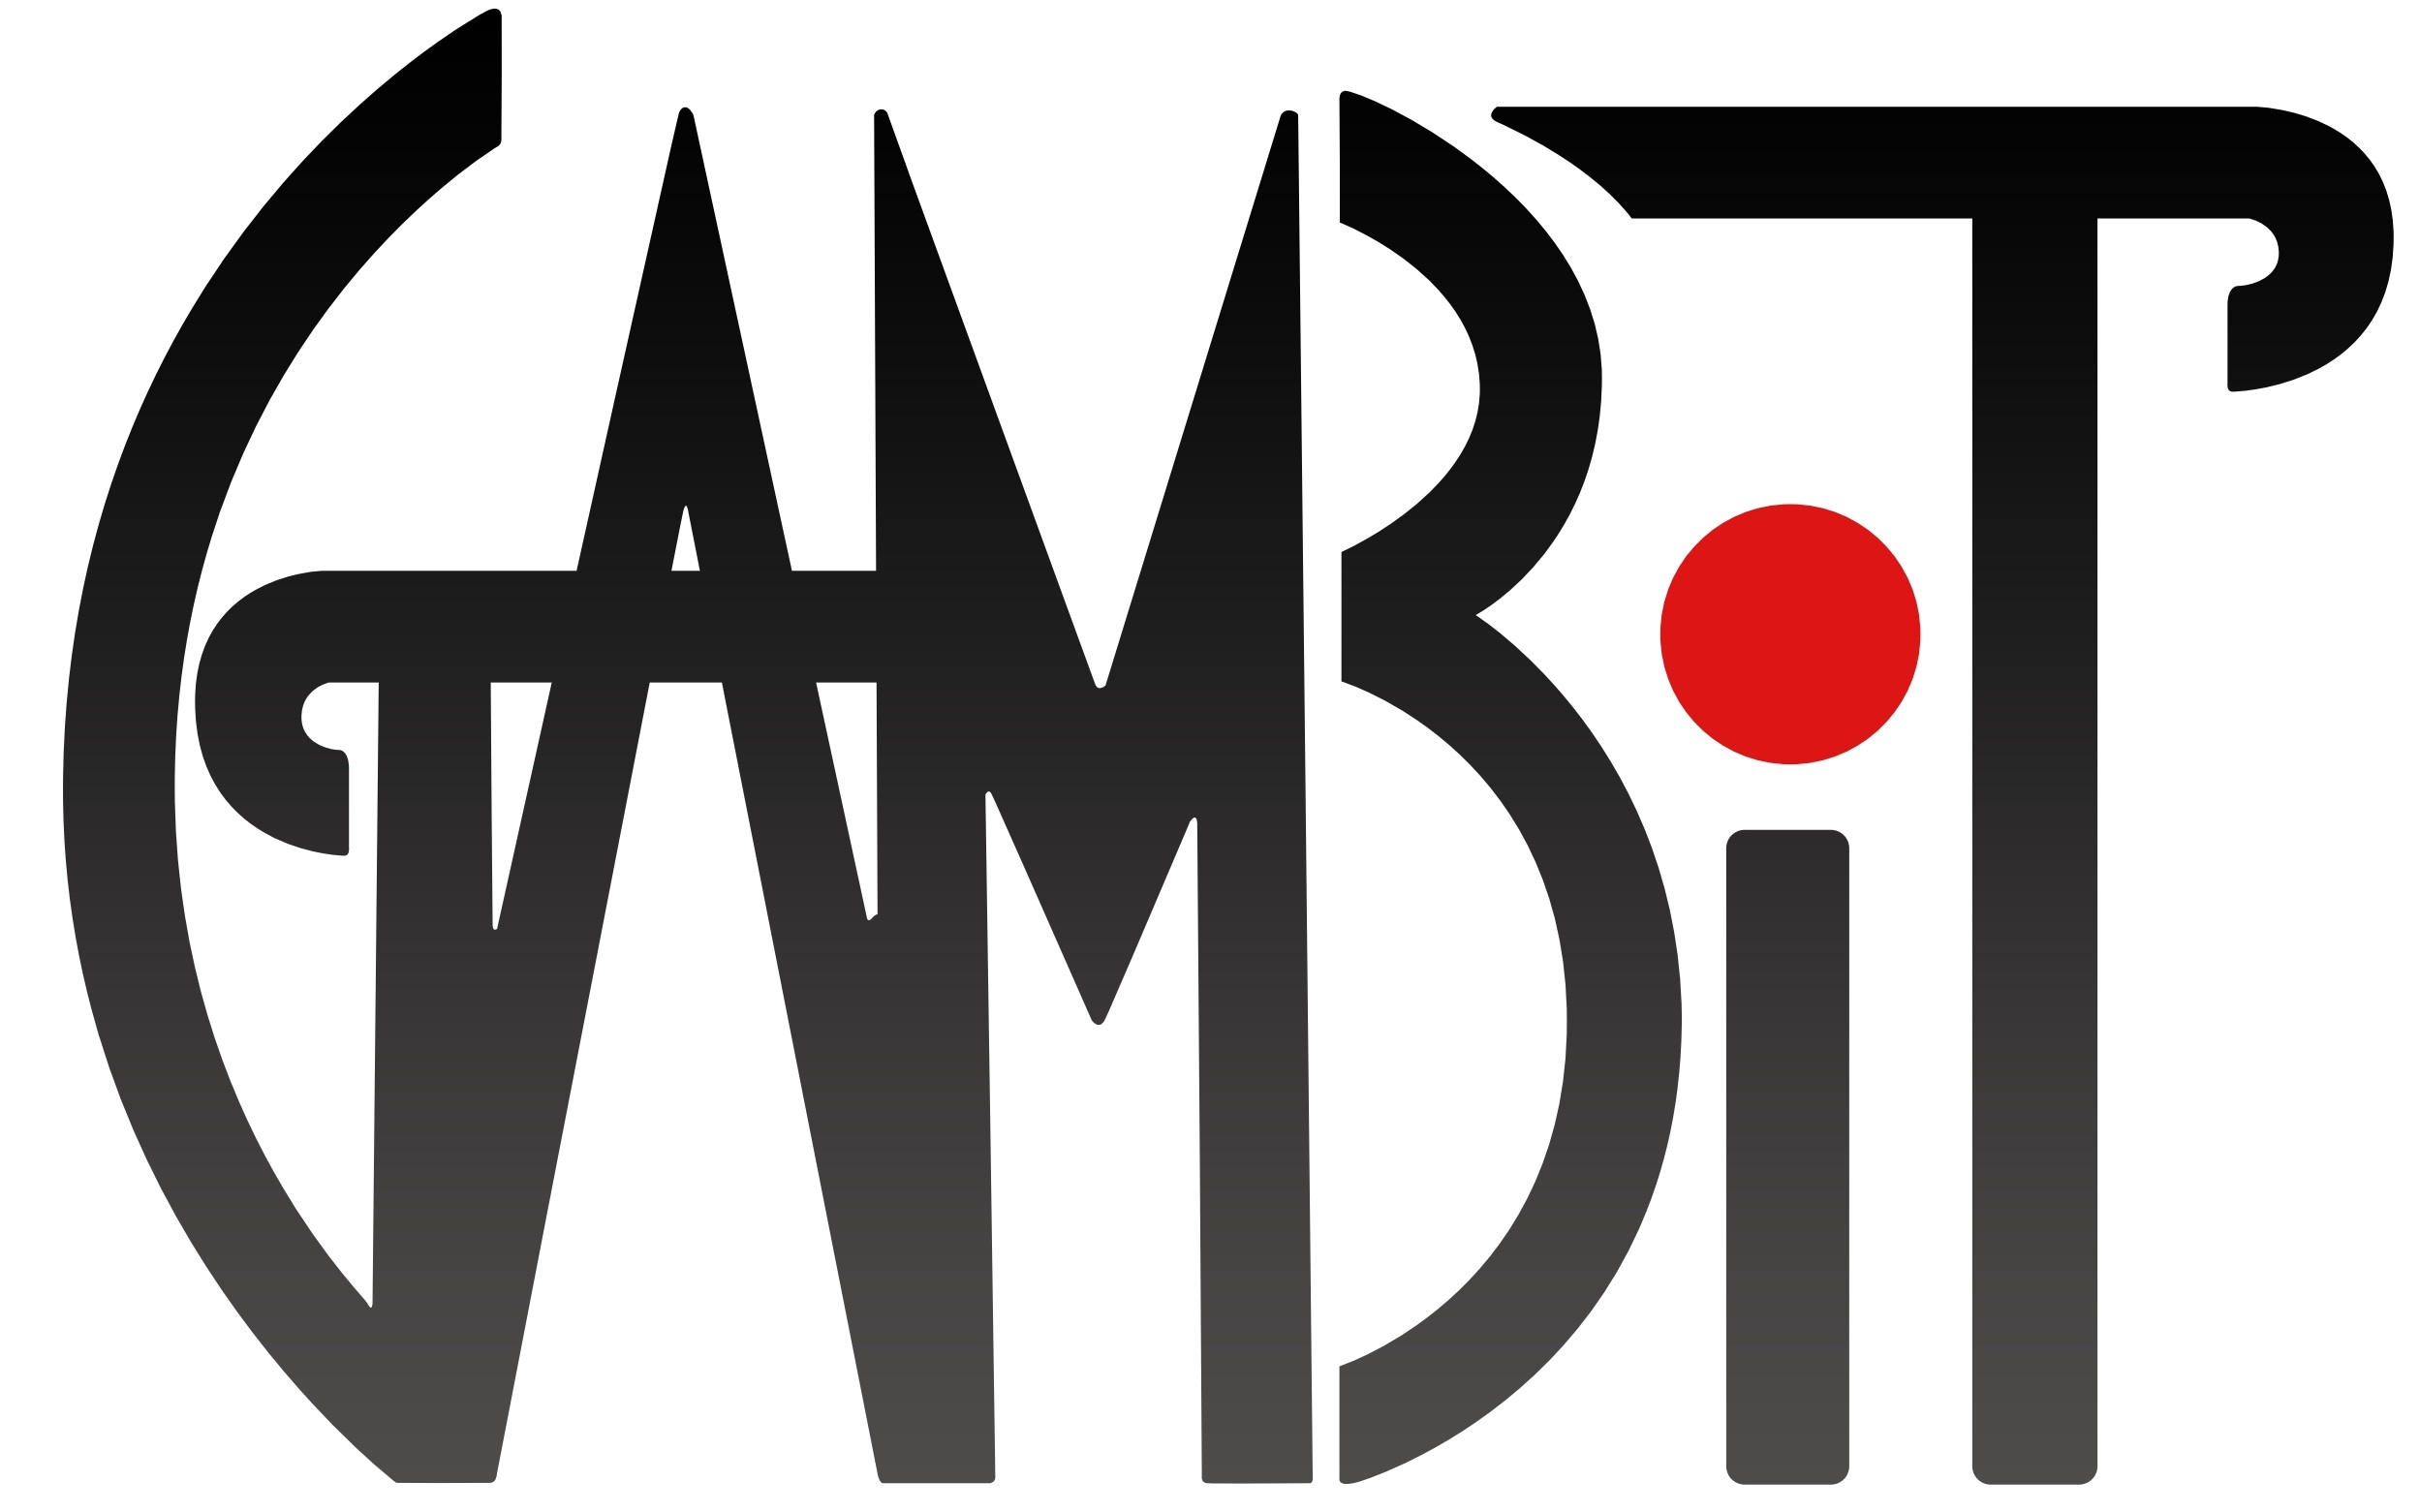 GAMBIT Logo.jpg ffff2a8c7ba9c31adaeca3044aee86ba